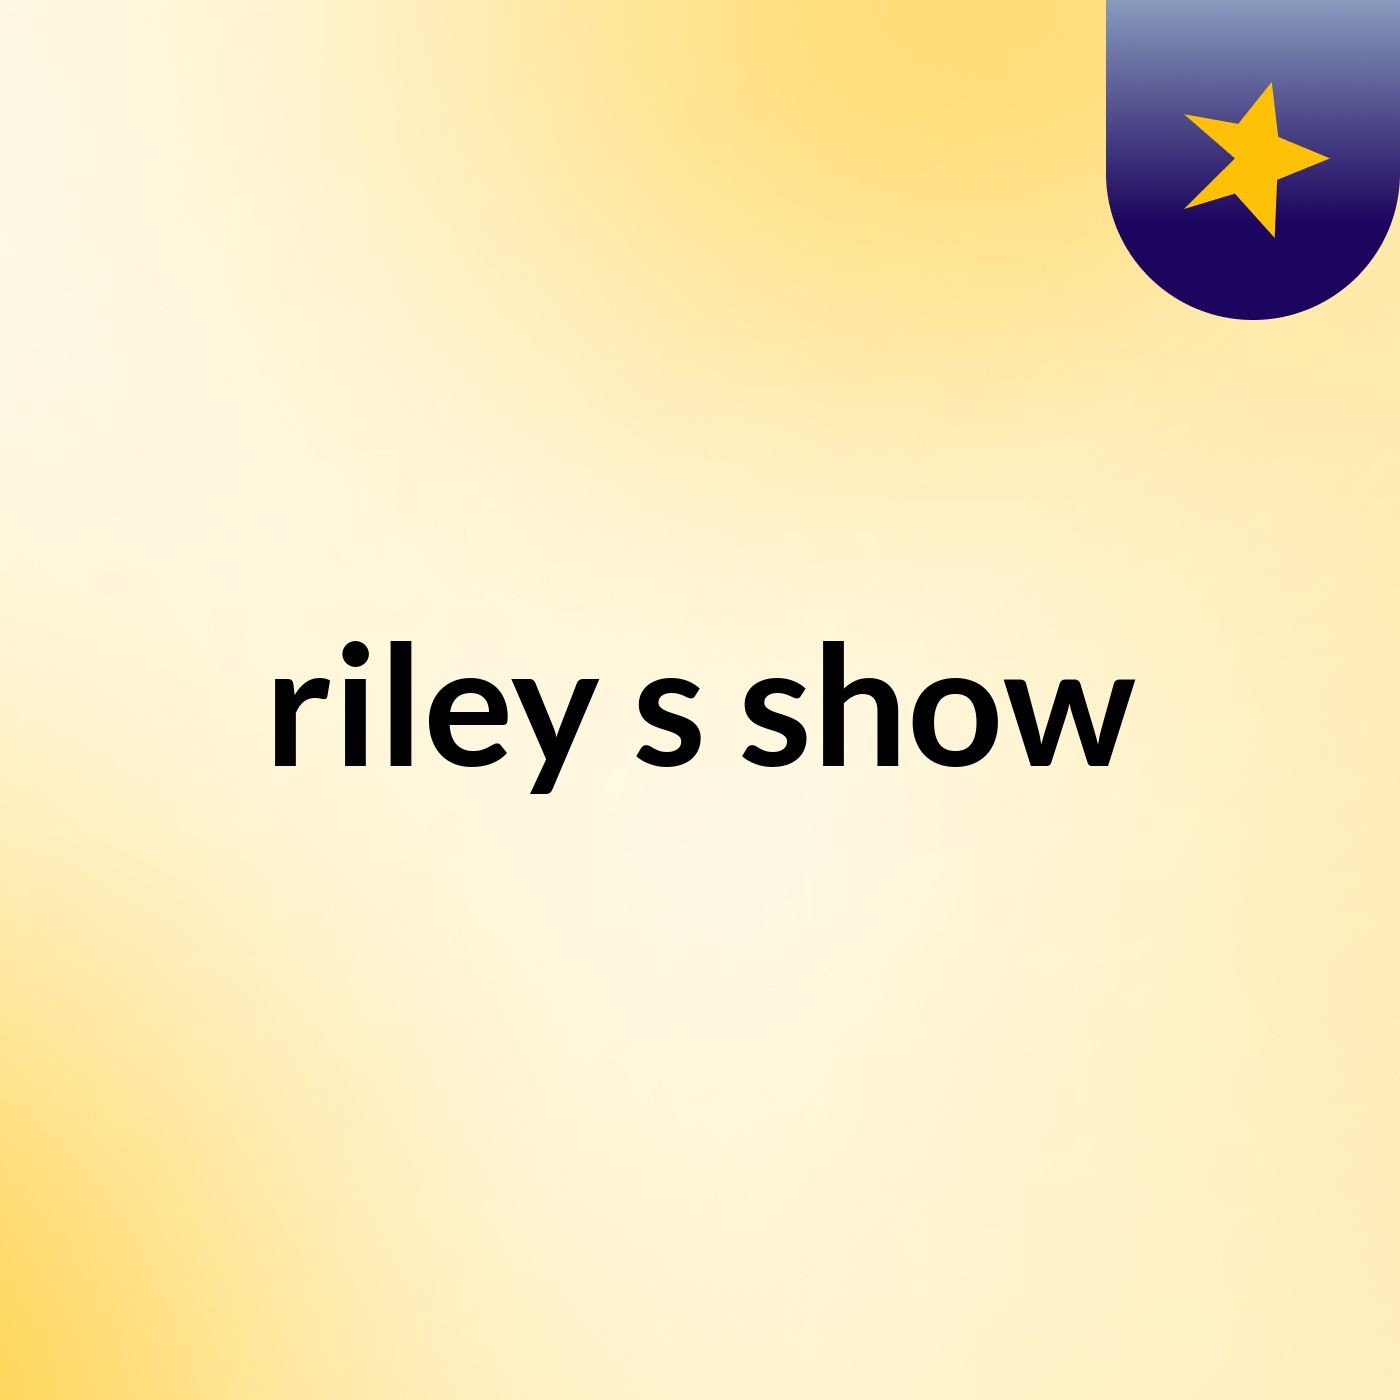 riley's show